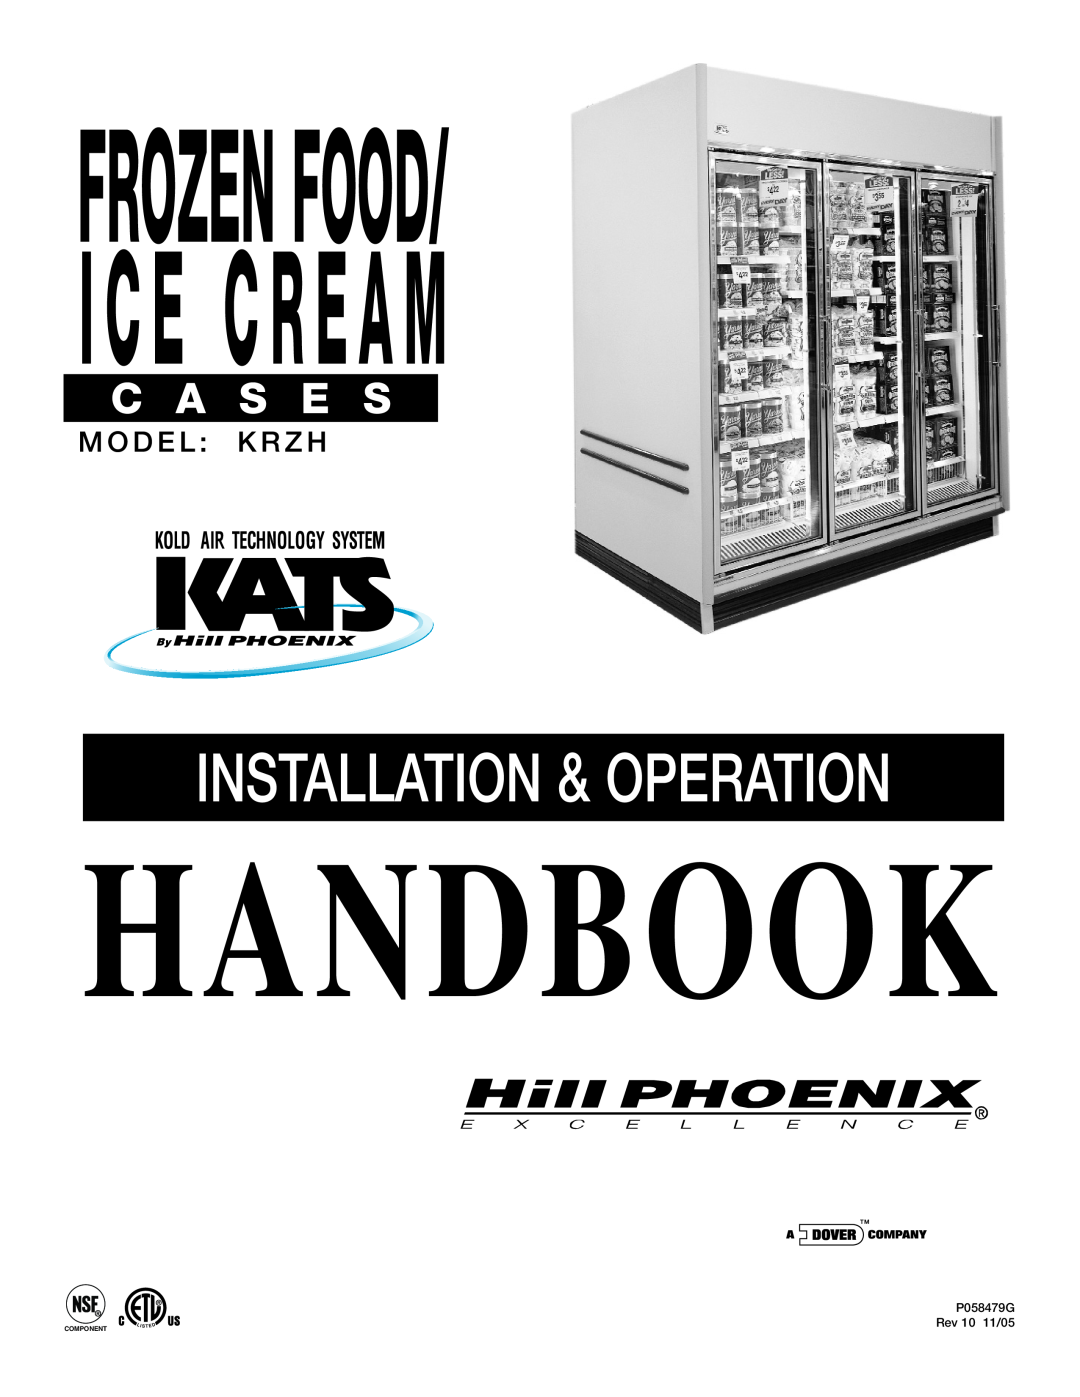 Hill Phoenix KRZH manual Handbook, Ice Cream, Frozenfood, Installation & Operation, C A S E S, P058479G Rev 10 11/05 